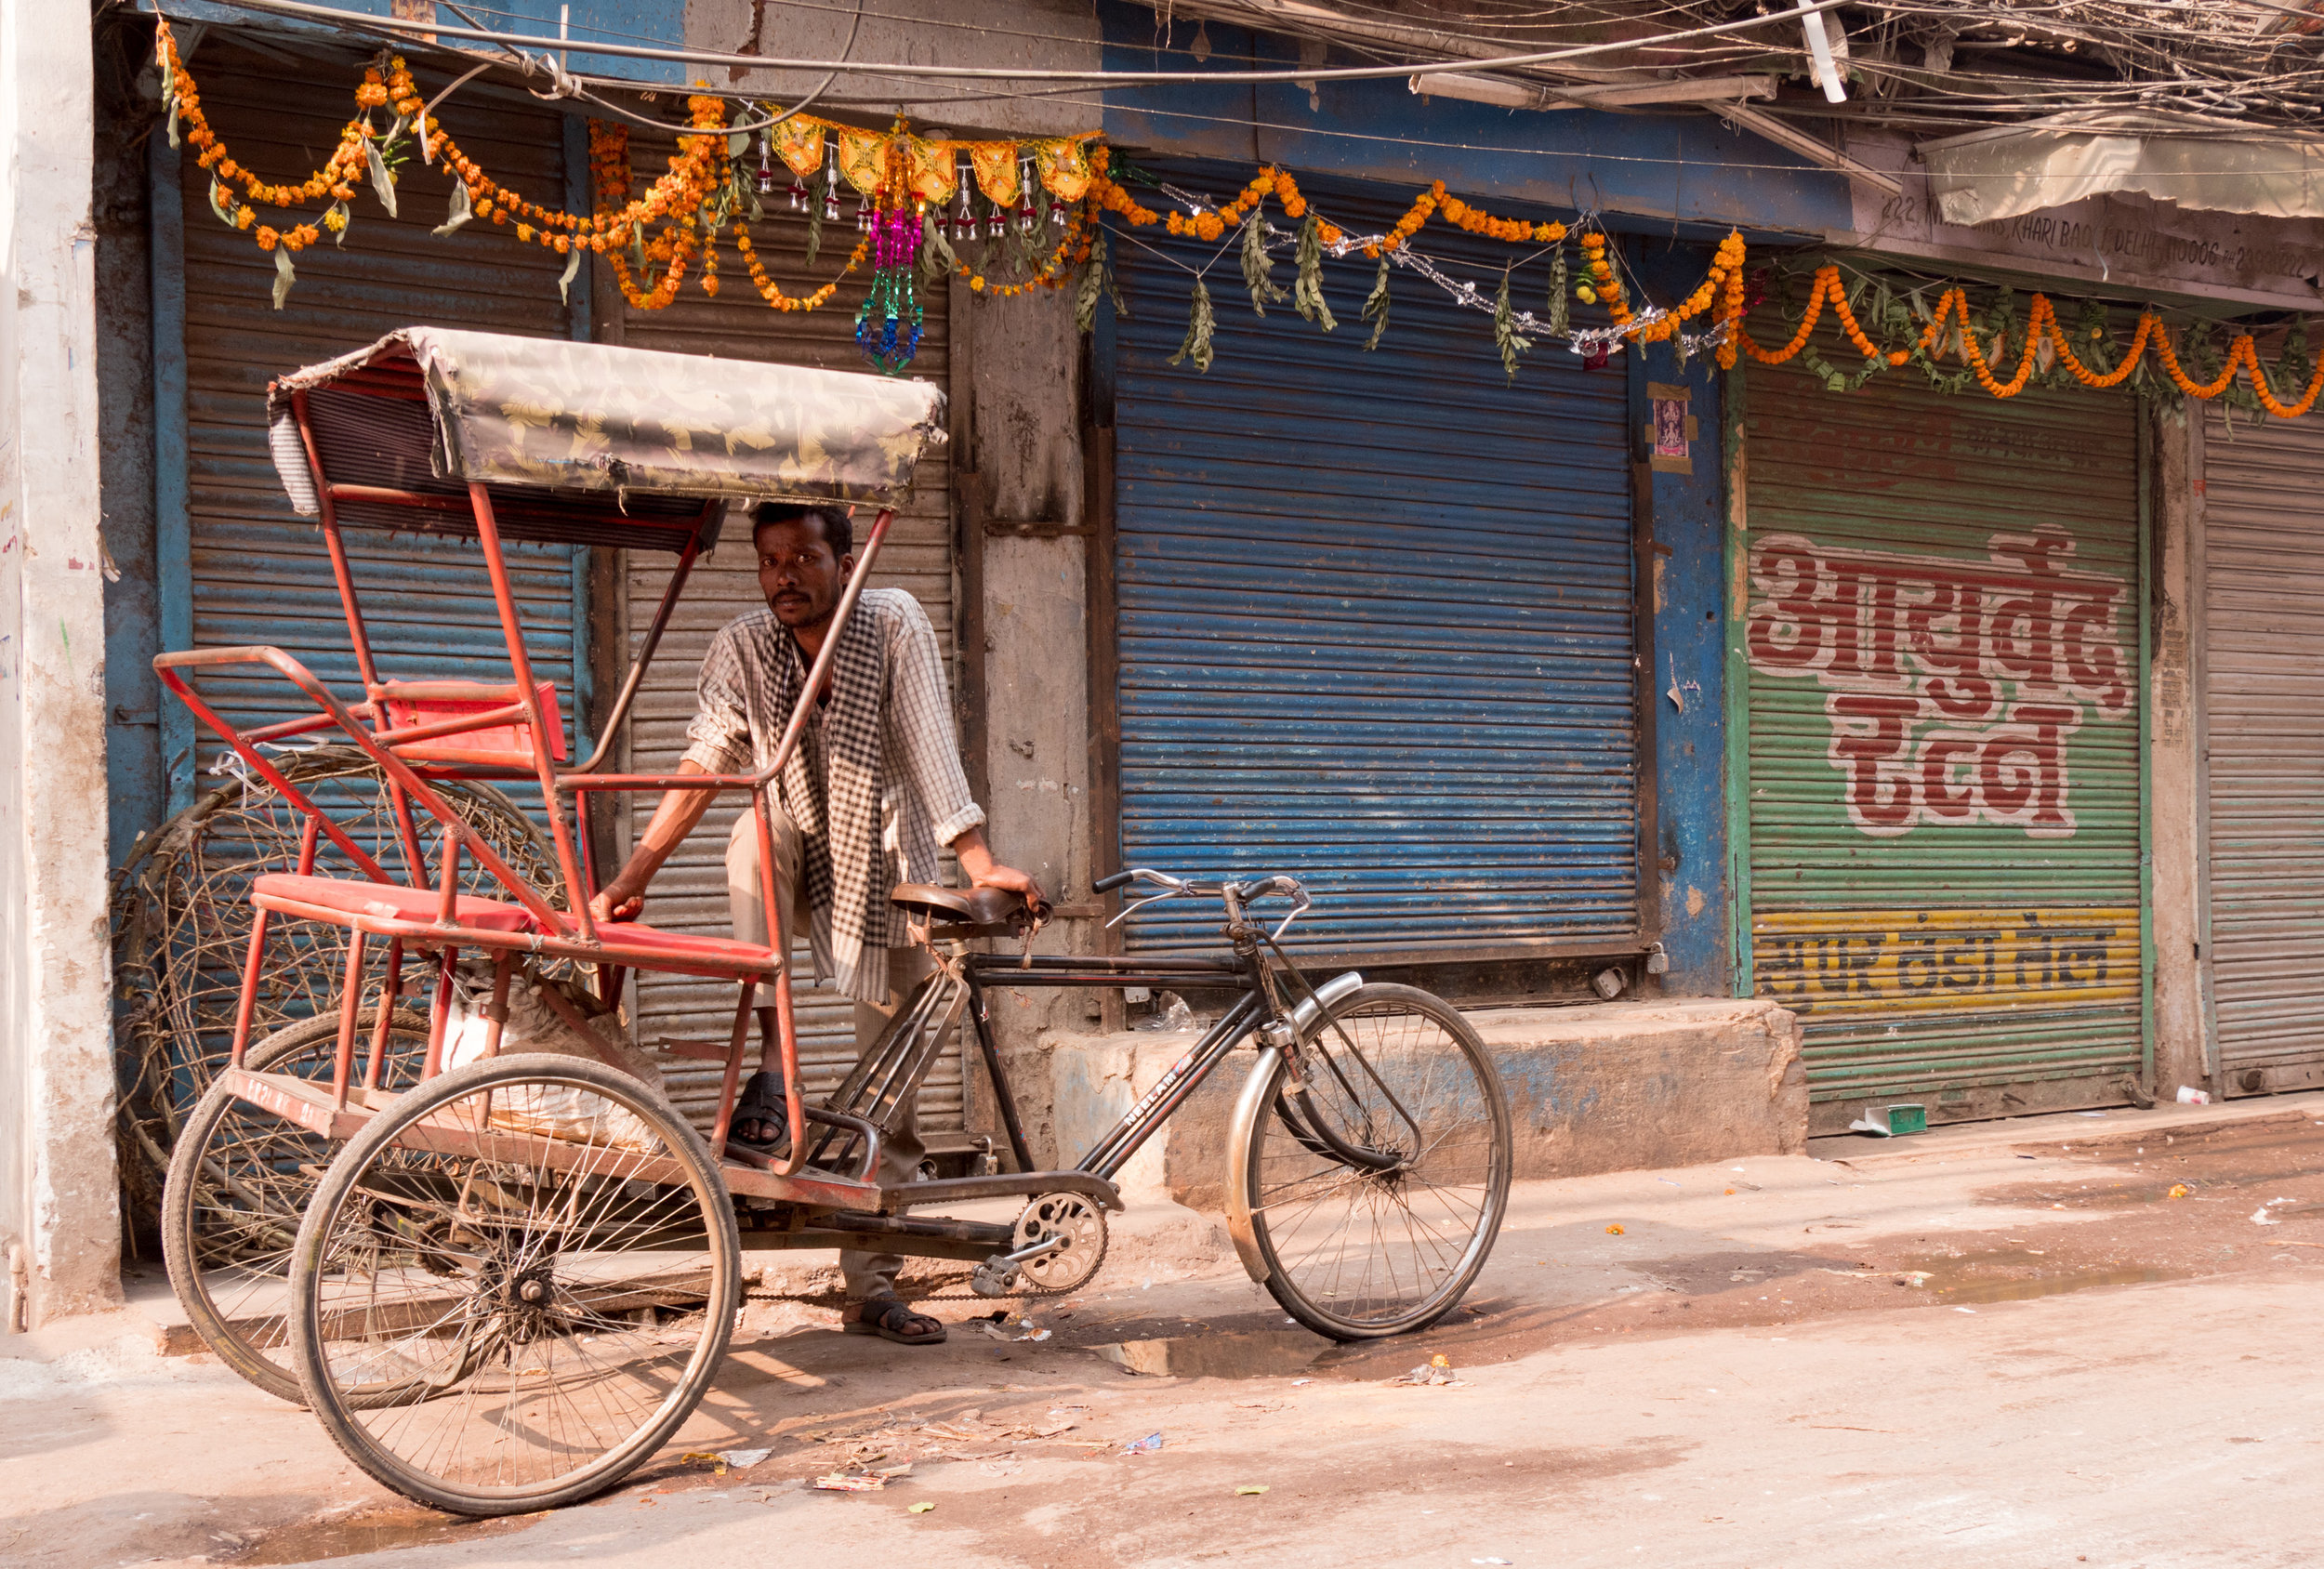 Man Standing with His Rickshaw at Spice Market - Old Delhi, India - Copyright 2016 Ralph Velasco.jpg